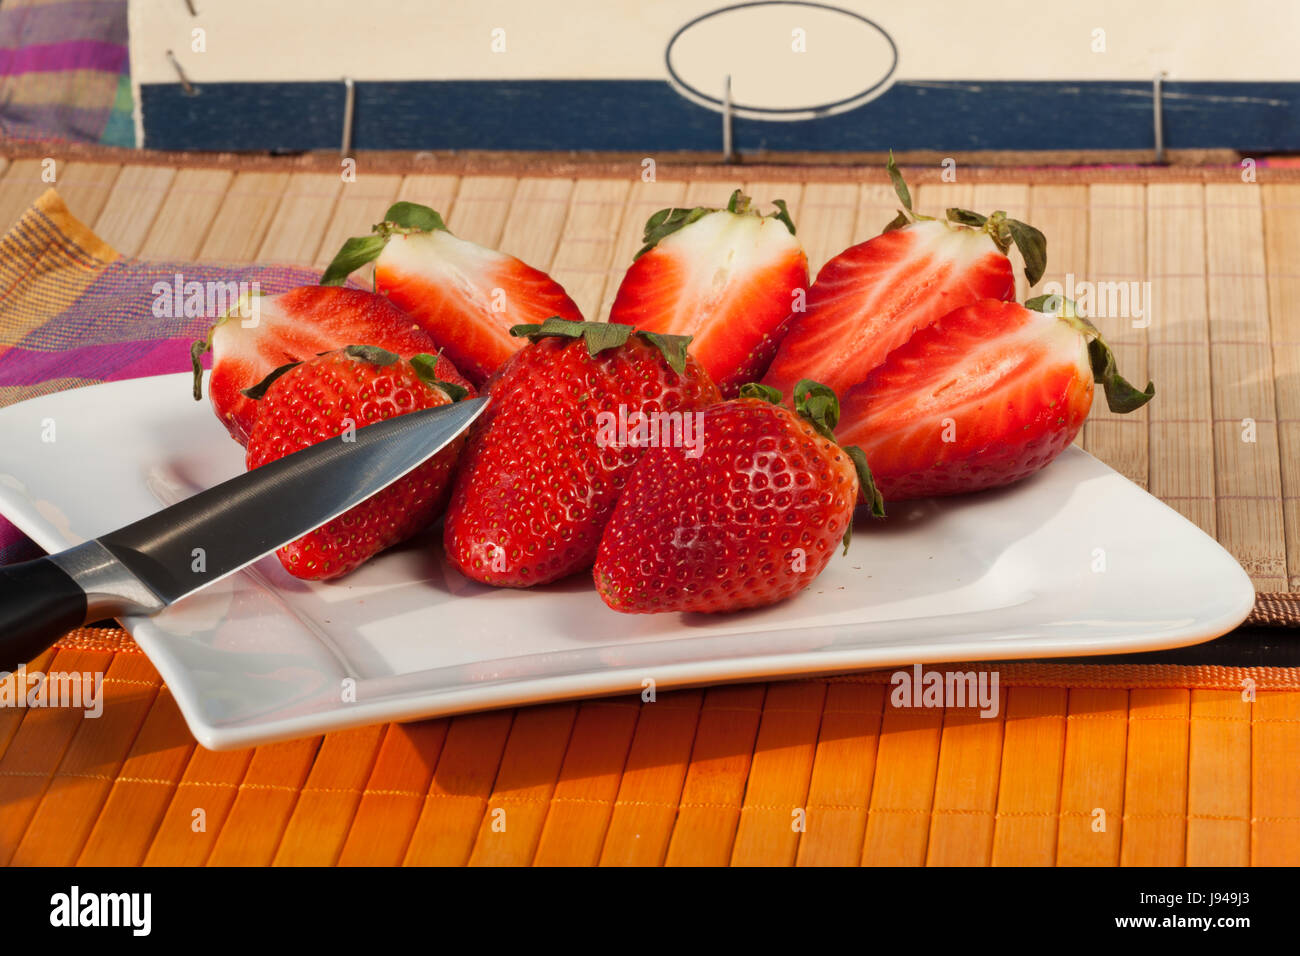 garden, fruit, plate, strawberry, gardens, arm, weapon, knive, knife, harvest, Stock Photo